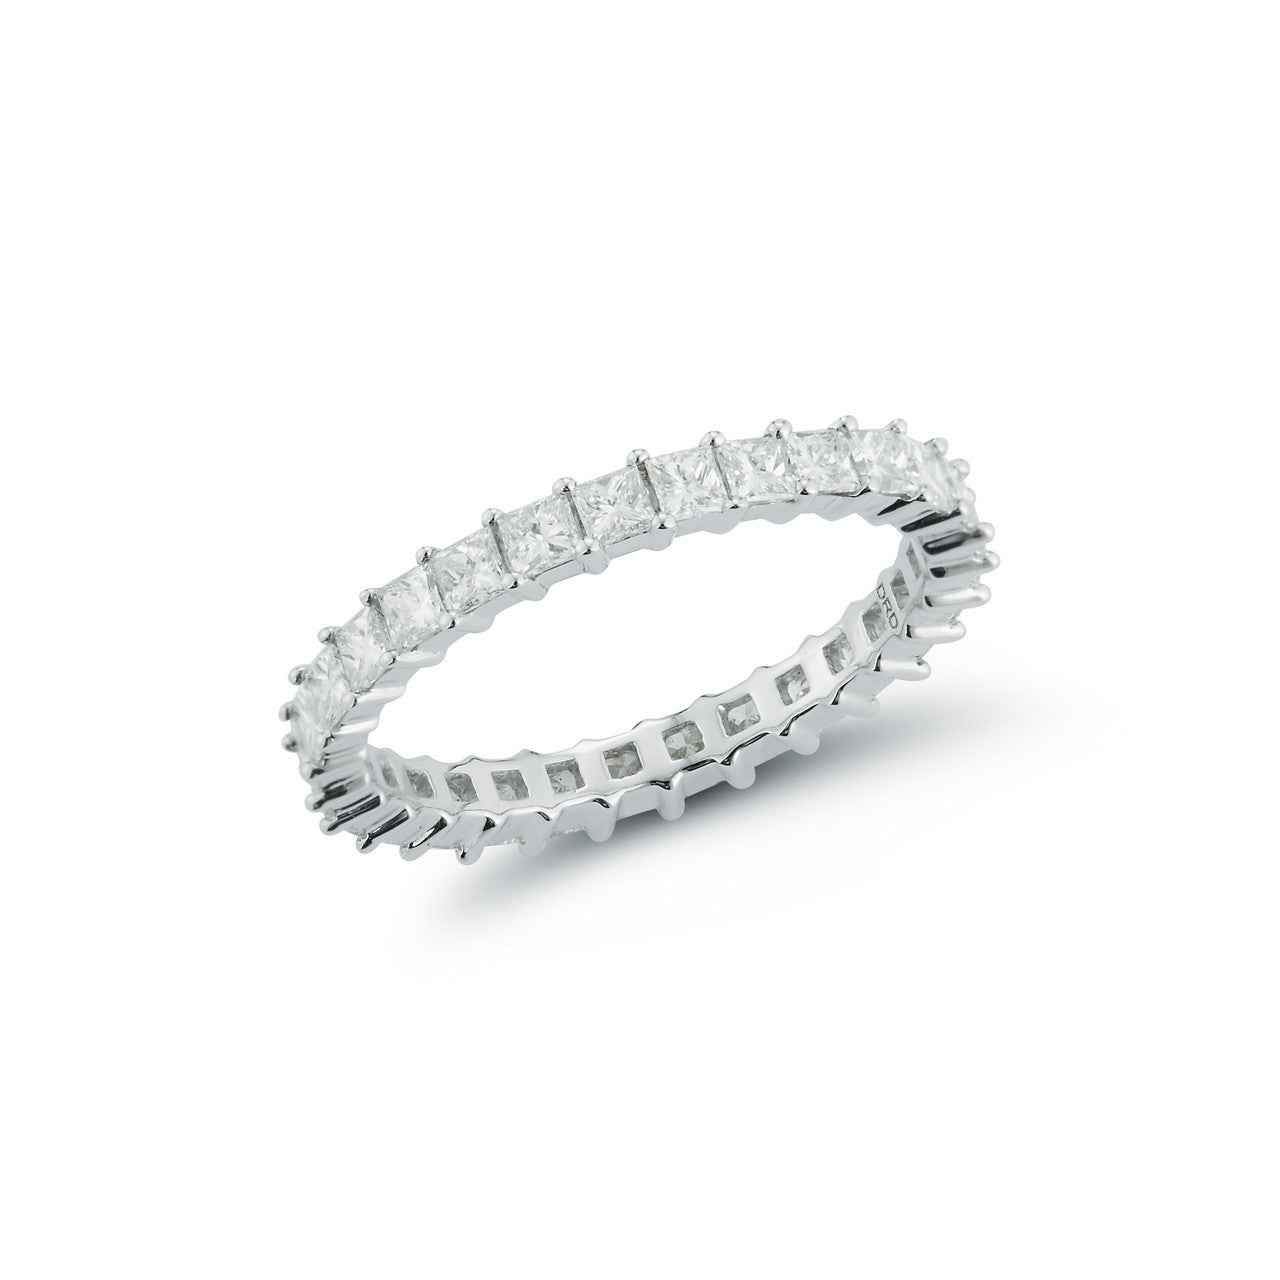 White Gold-1^Eternity Ring Designs: Millie Ryan Princess Cut Eternity Diamond Ring in White Gold